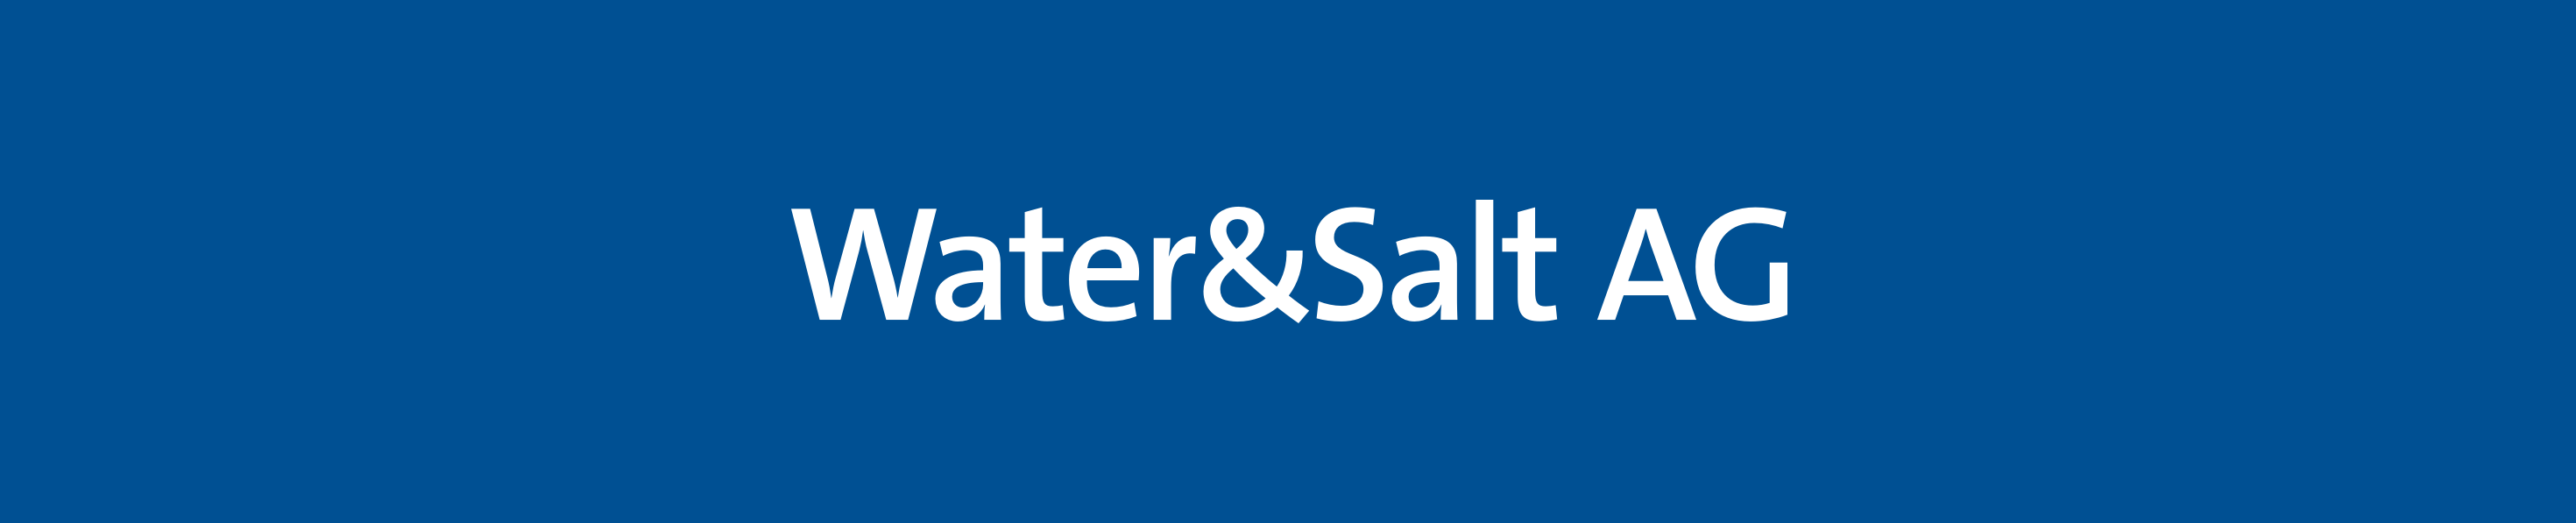 WATER & SALT AG